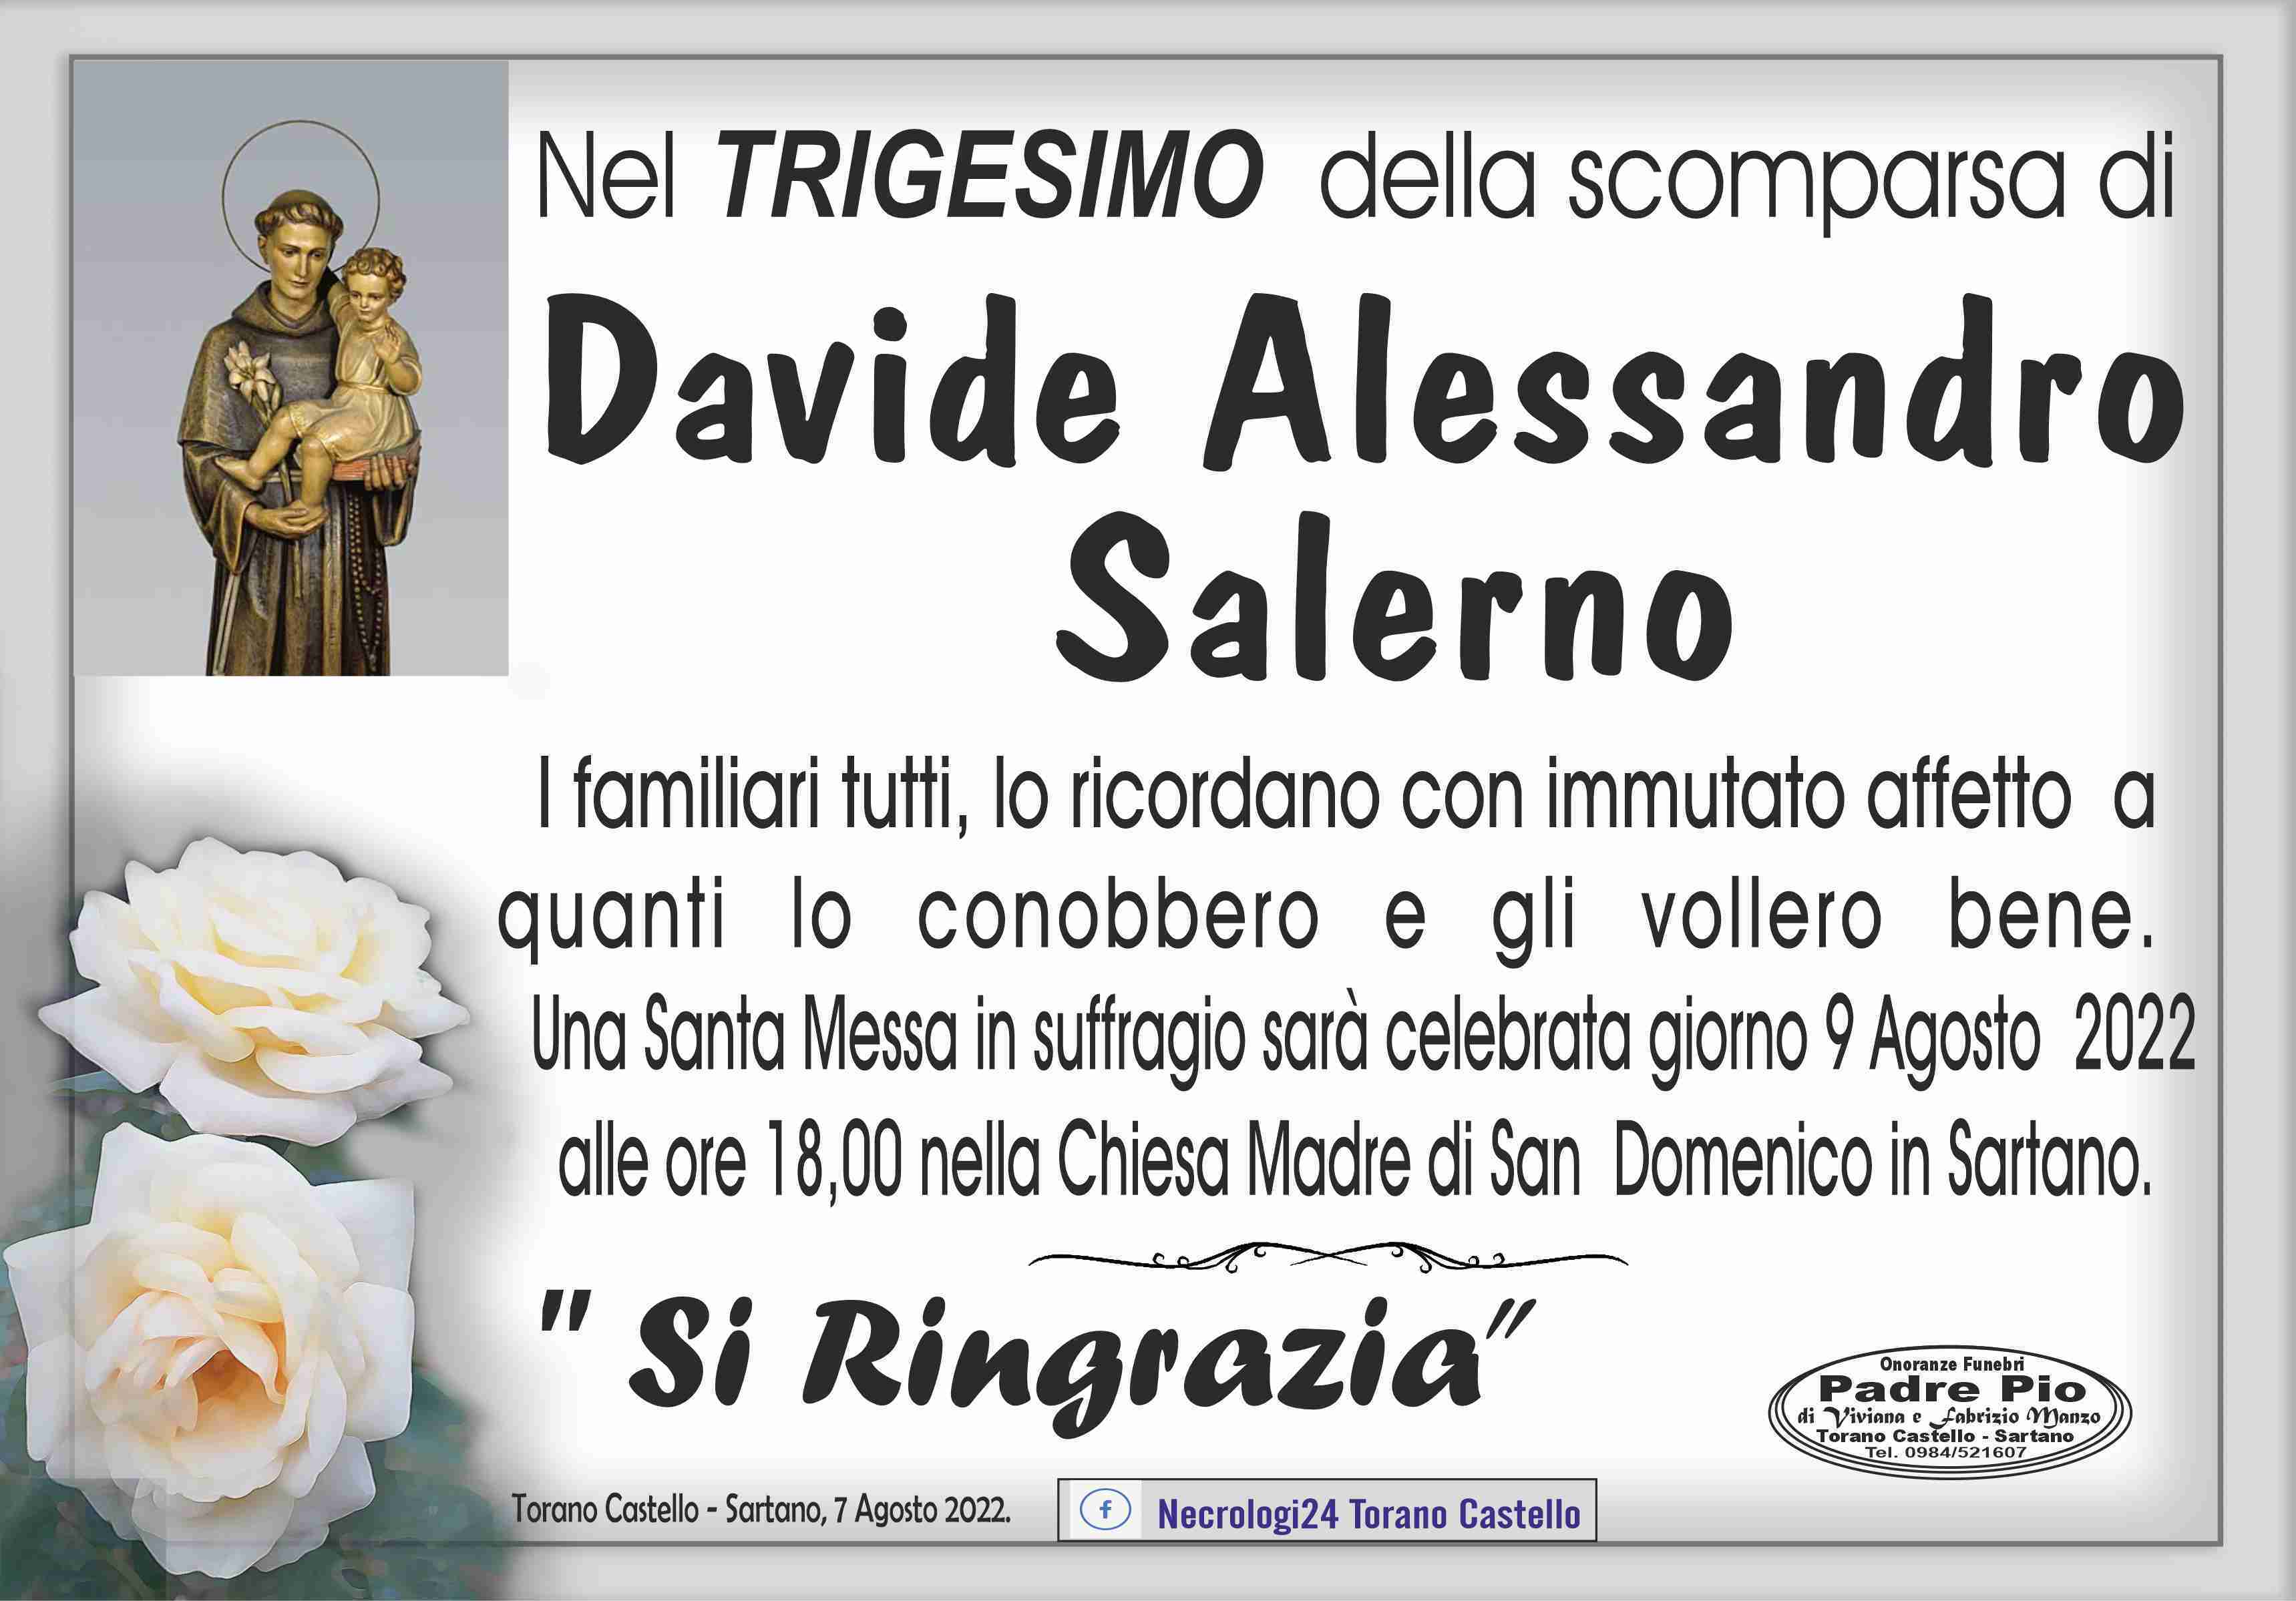 Davide Alessandro Salerno